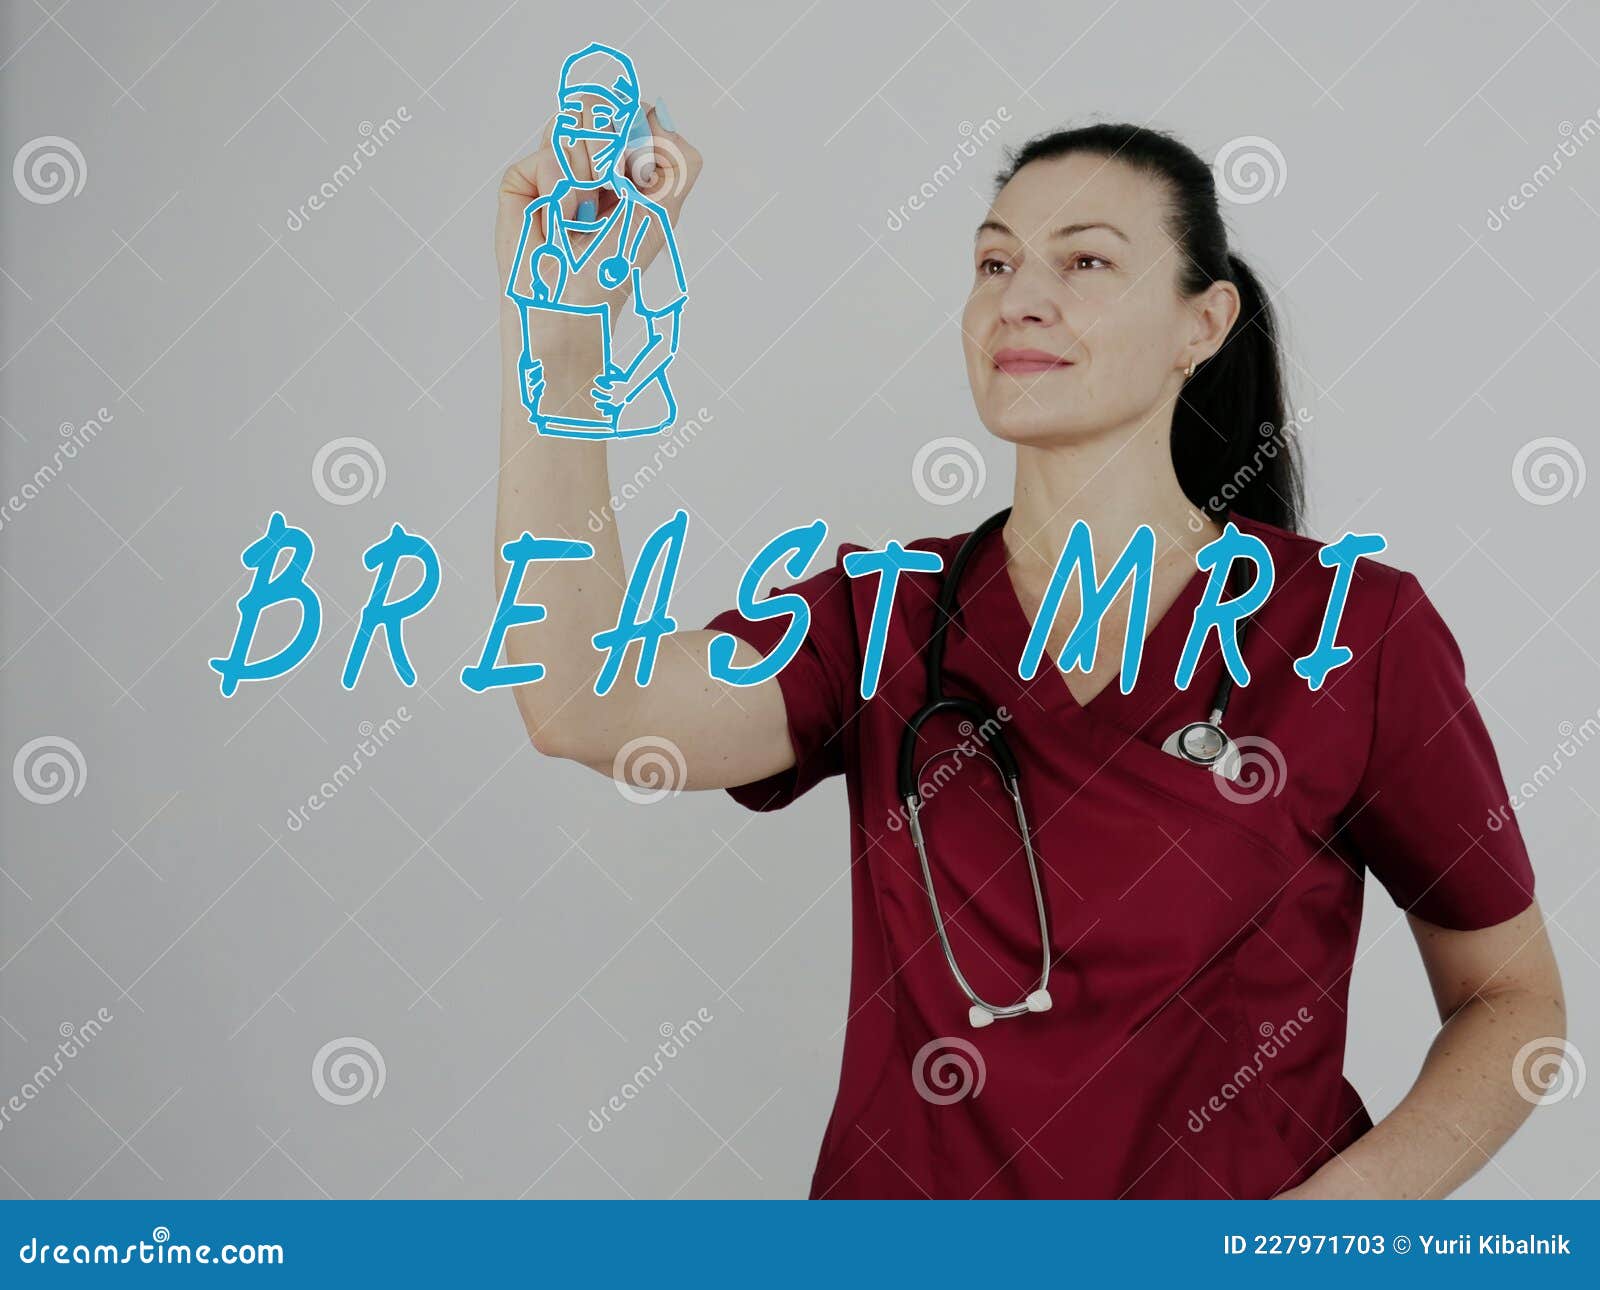 medico writing breast mri with marker